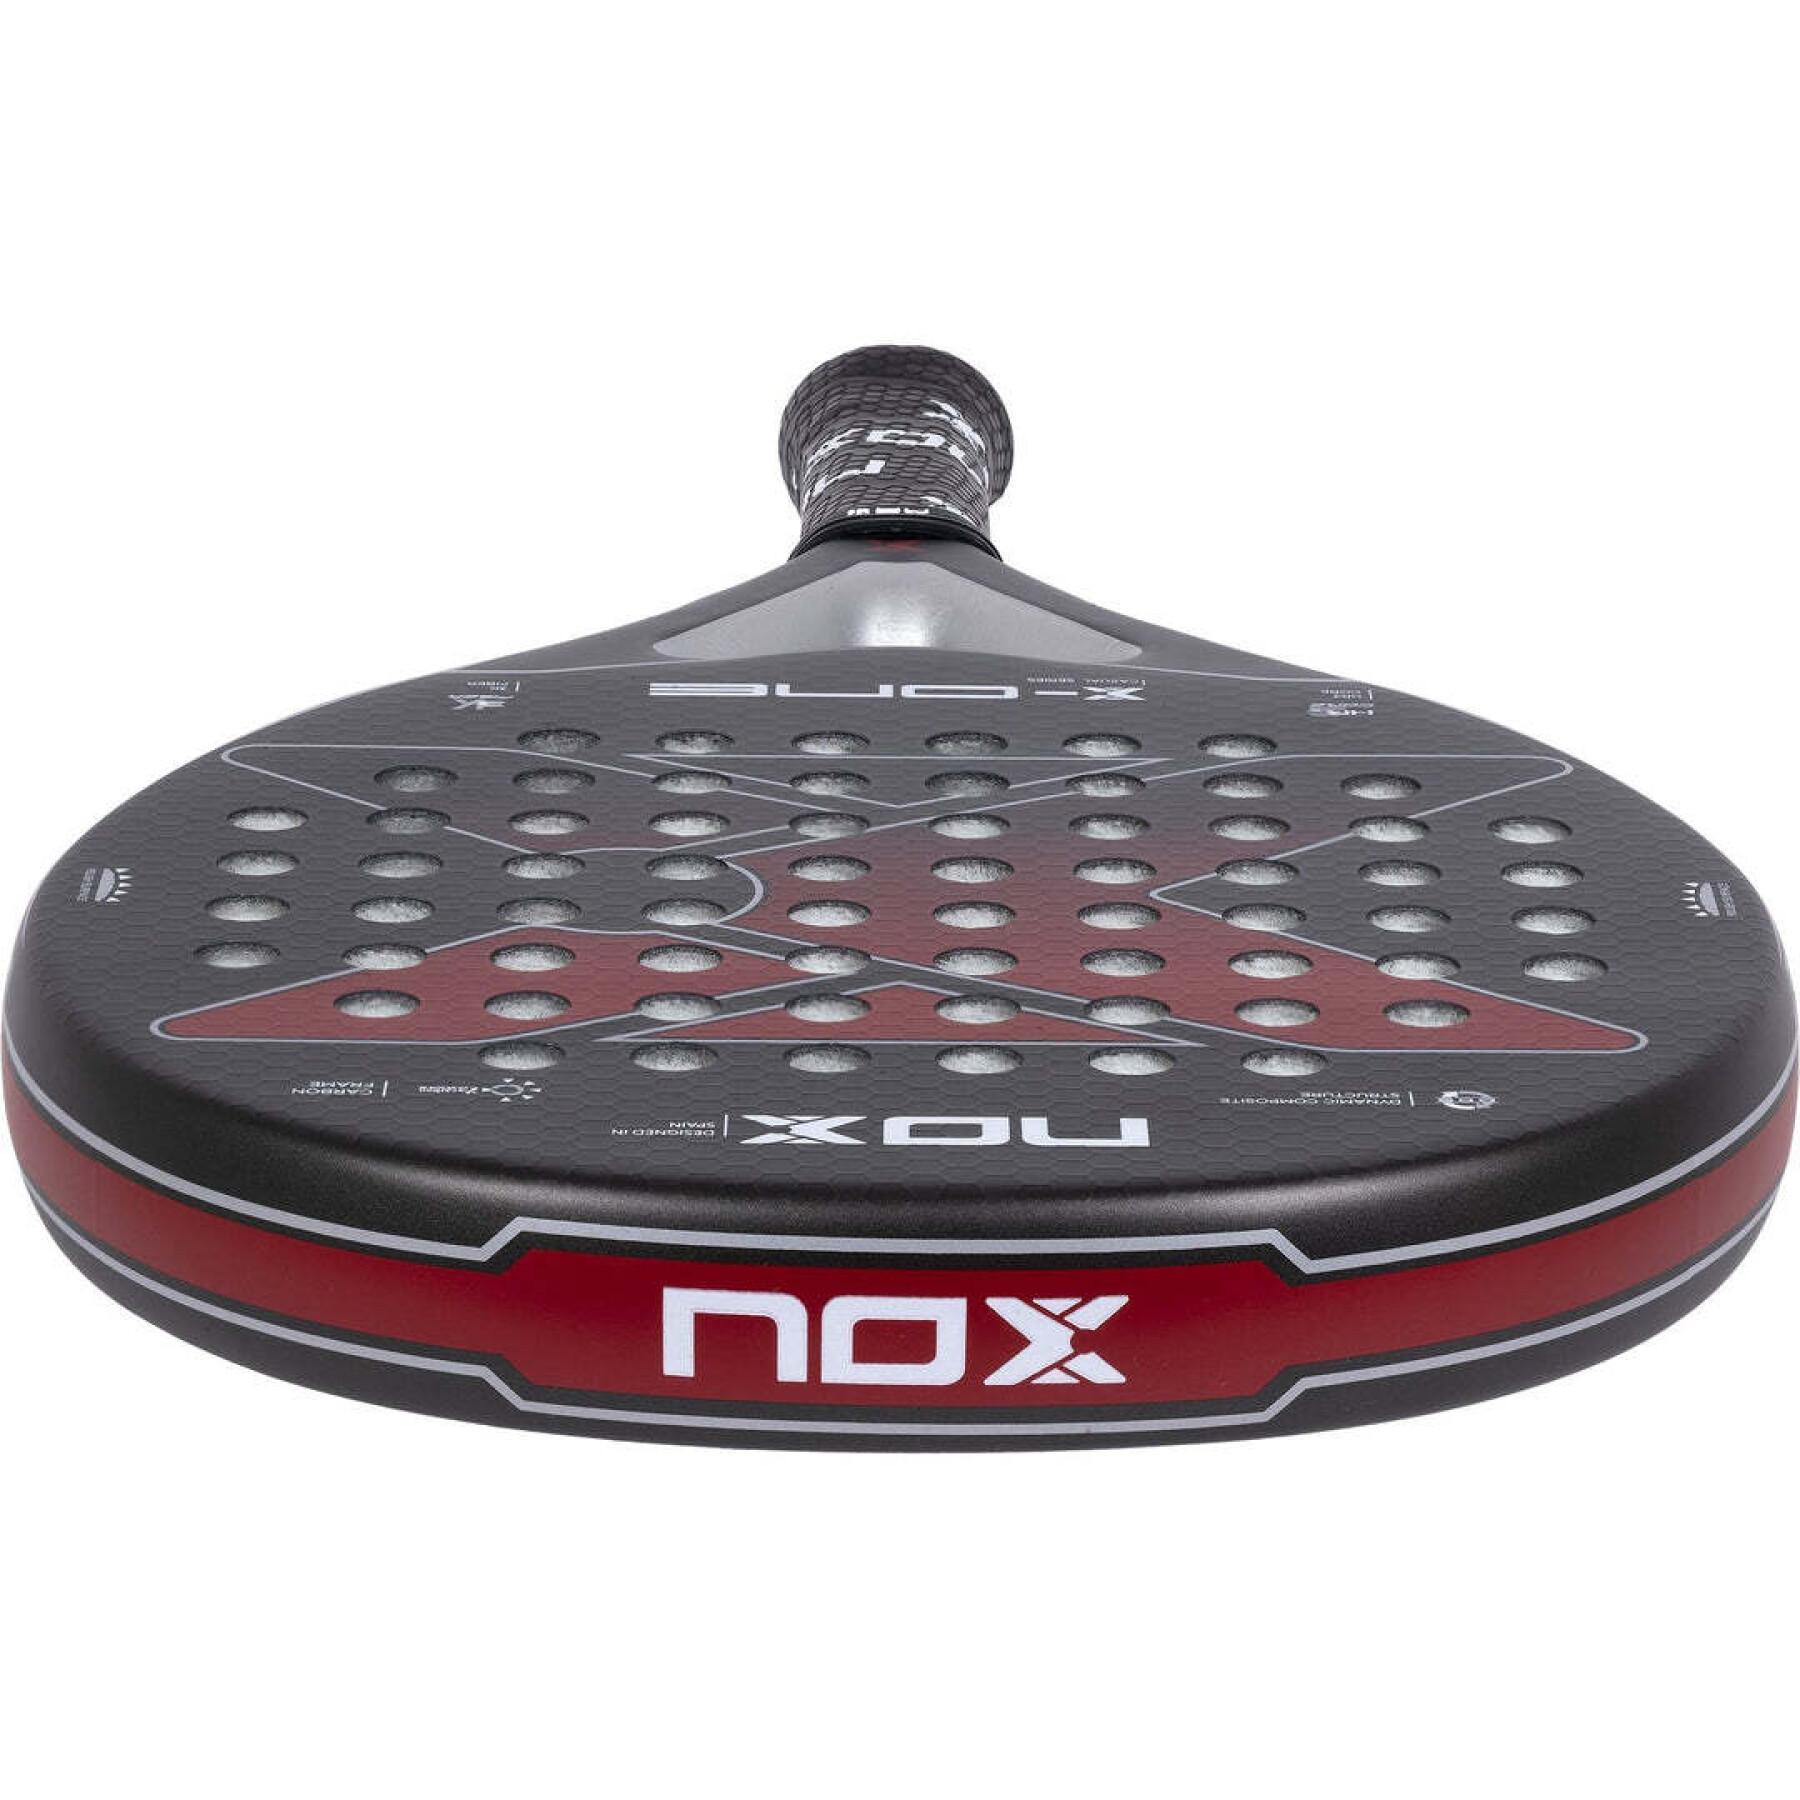 Racket van padel Nox X-One Evo